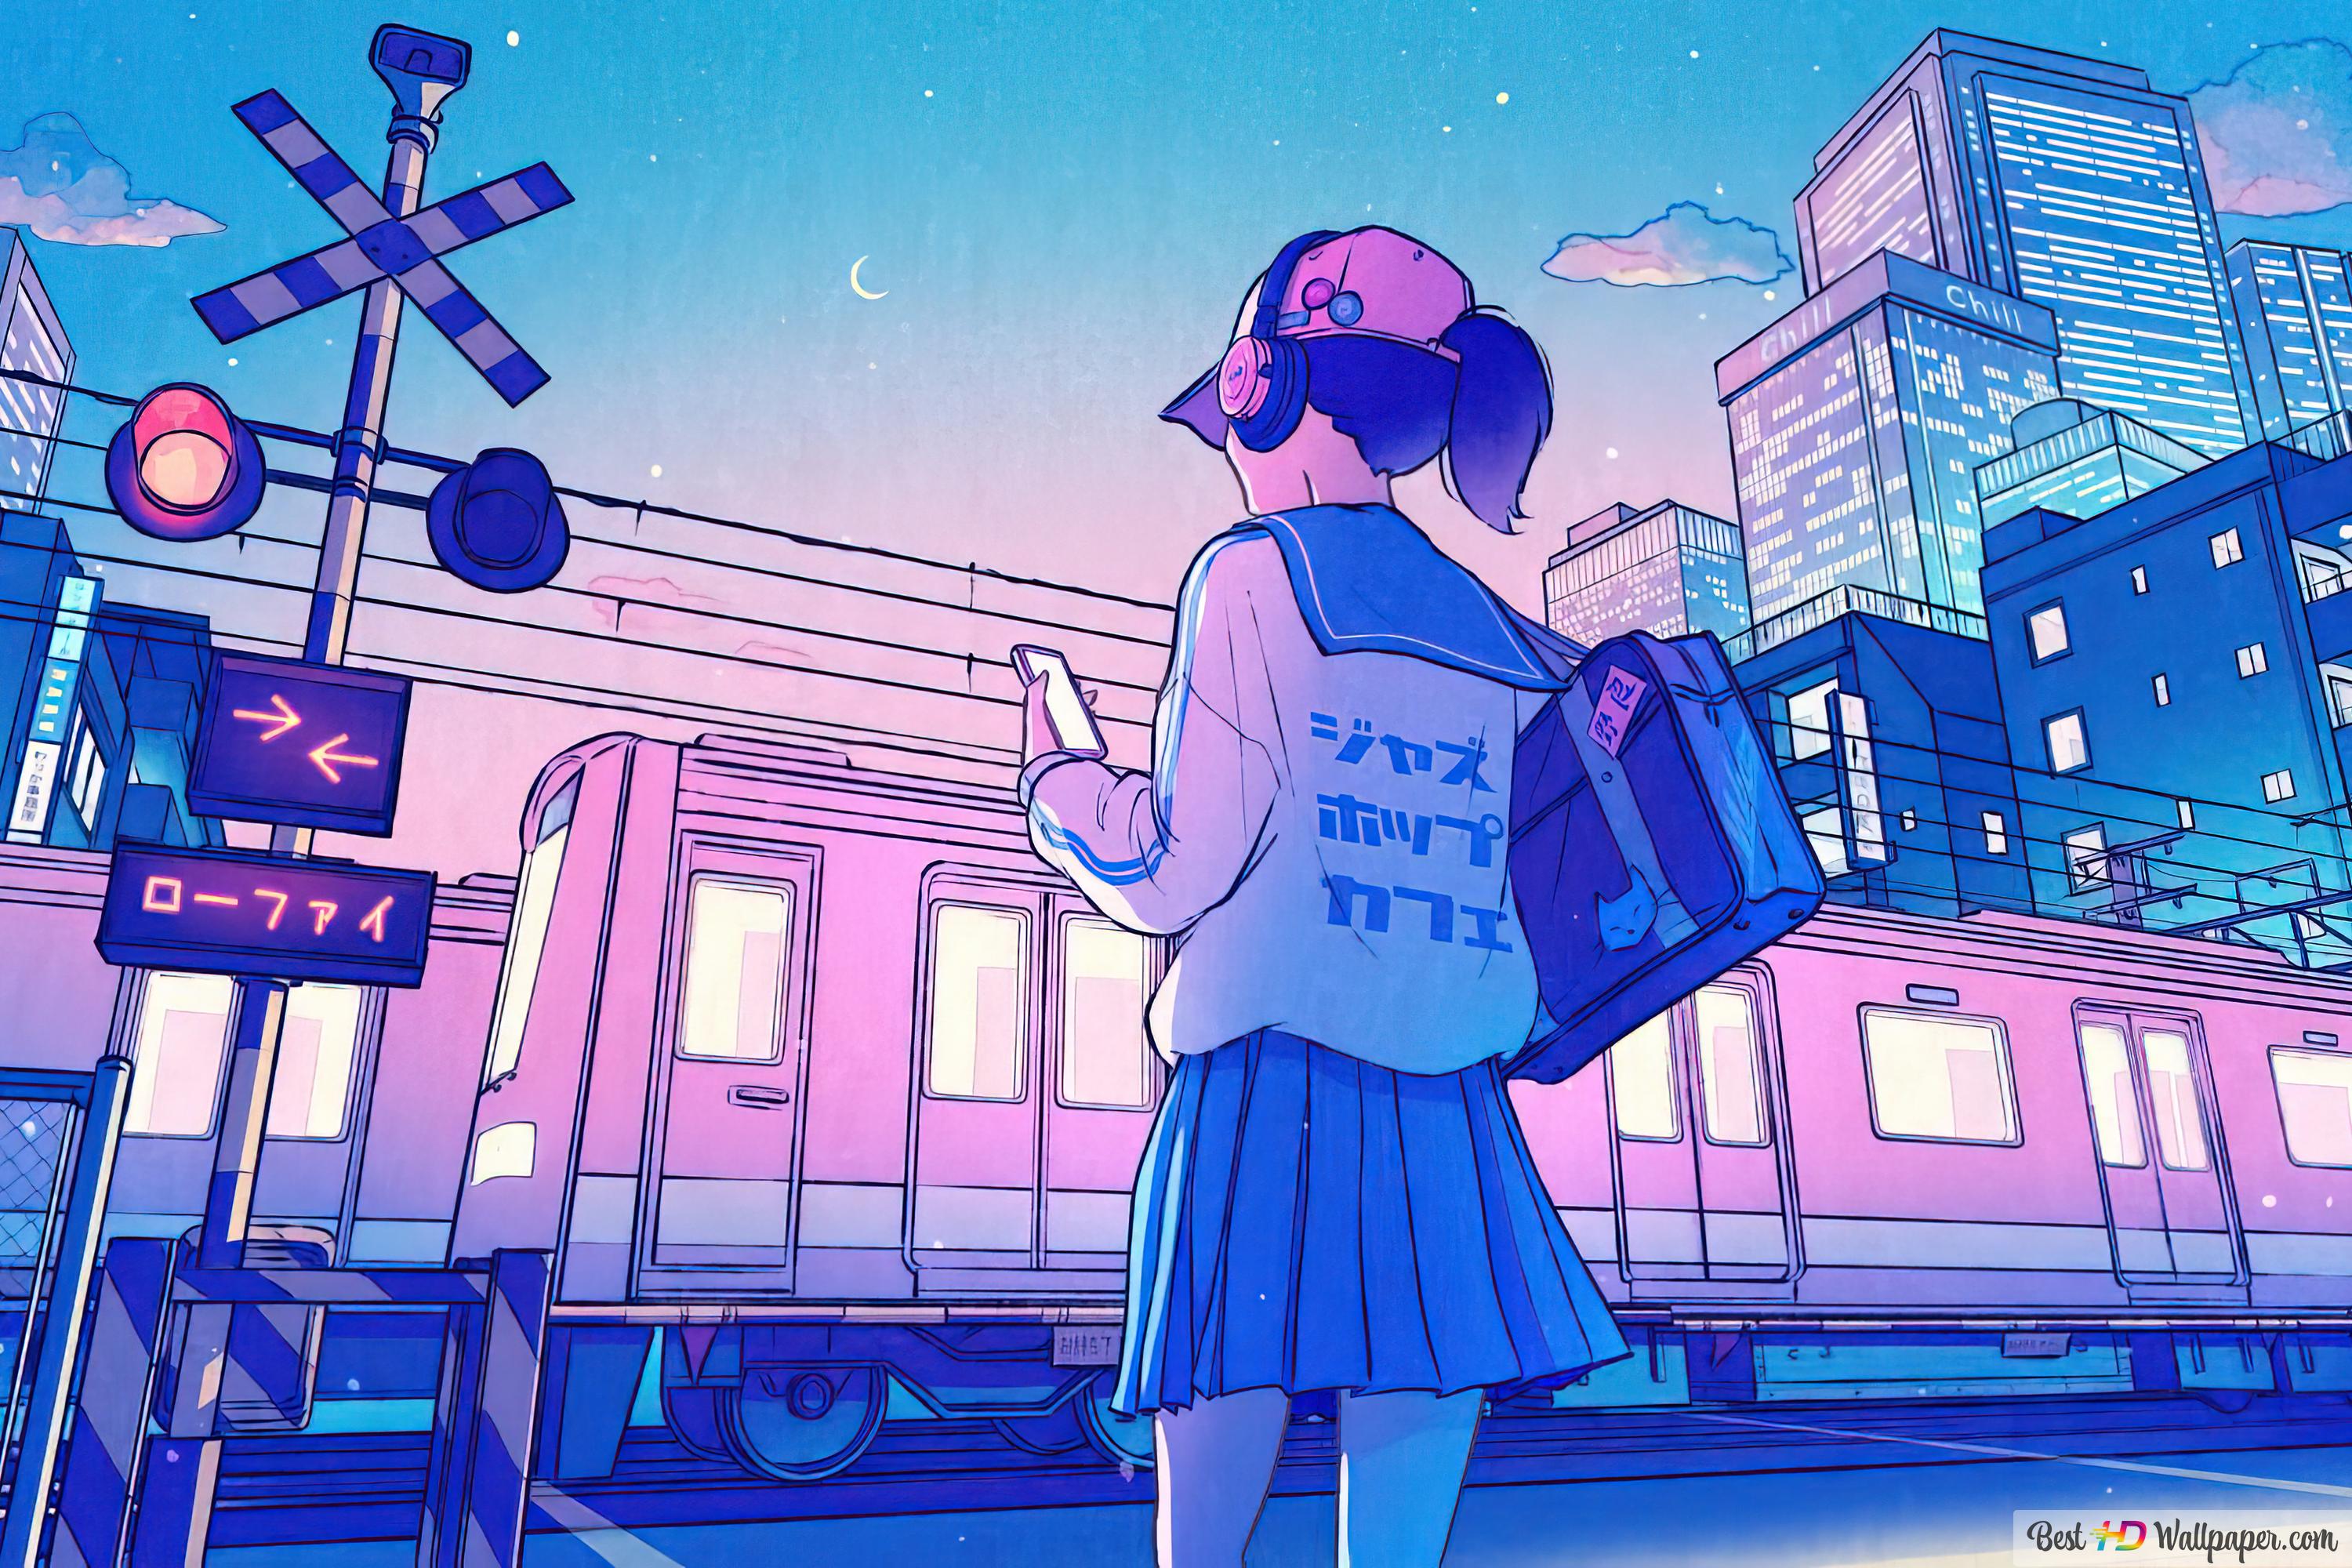 Anime Girl Art Train Night City 4K wallpaper download